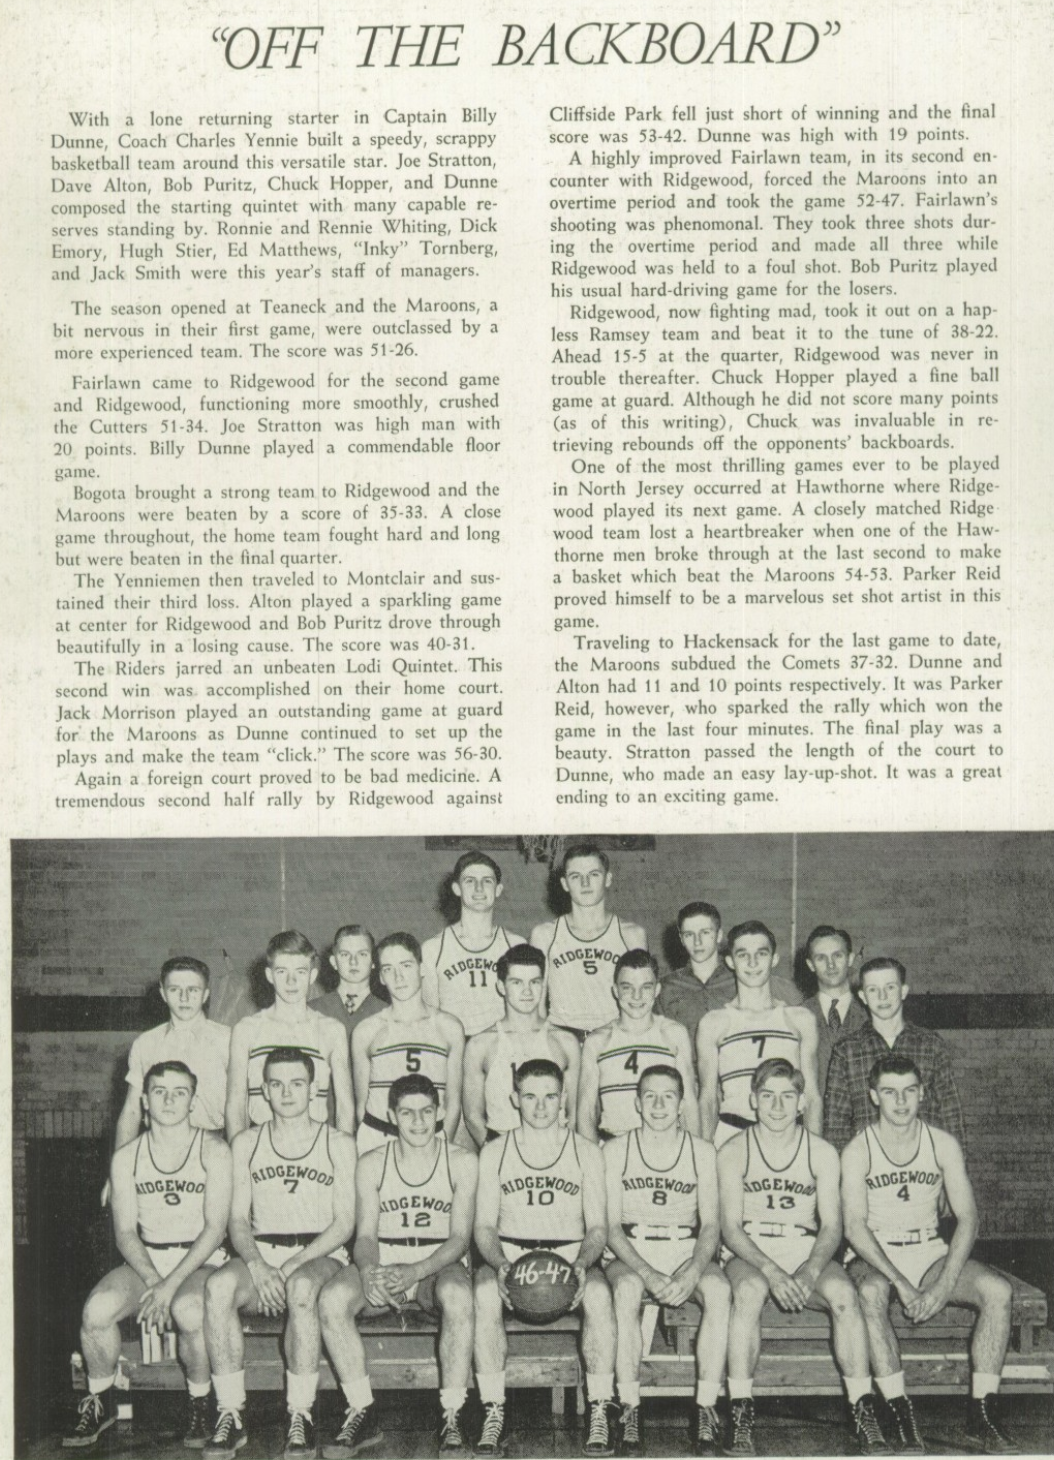 1947 Boys’ Basketball Team